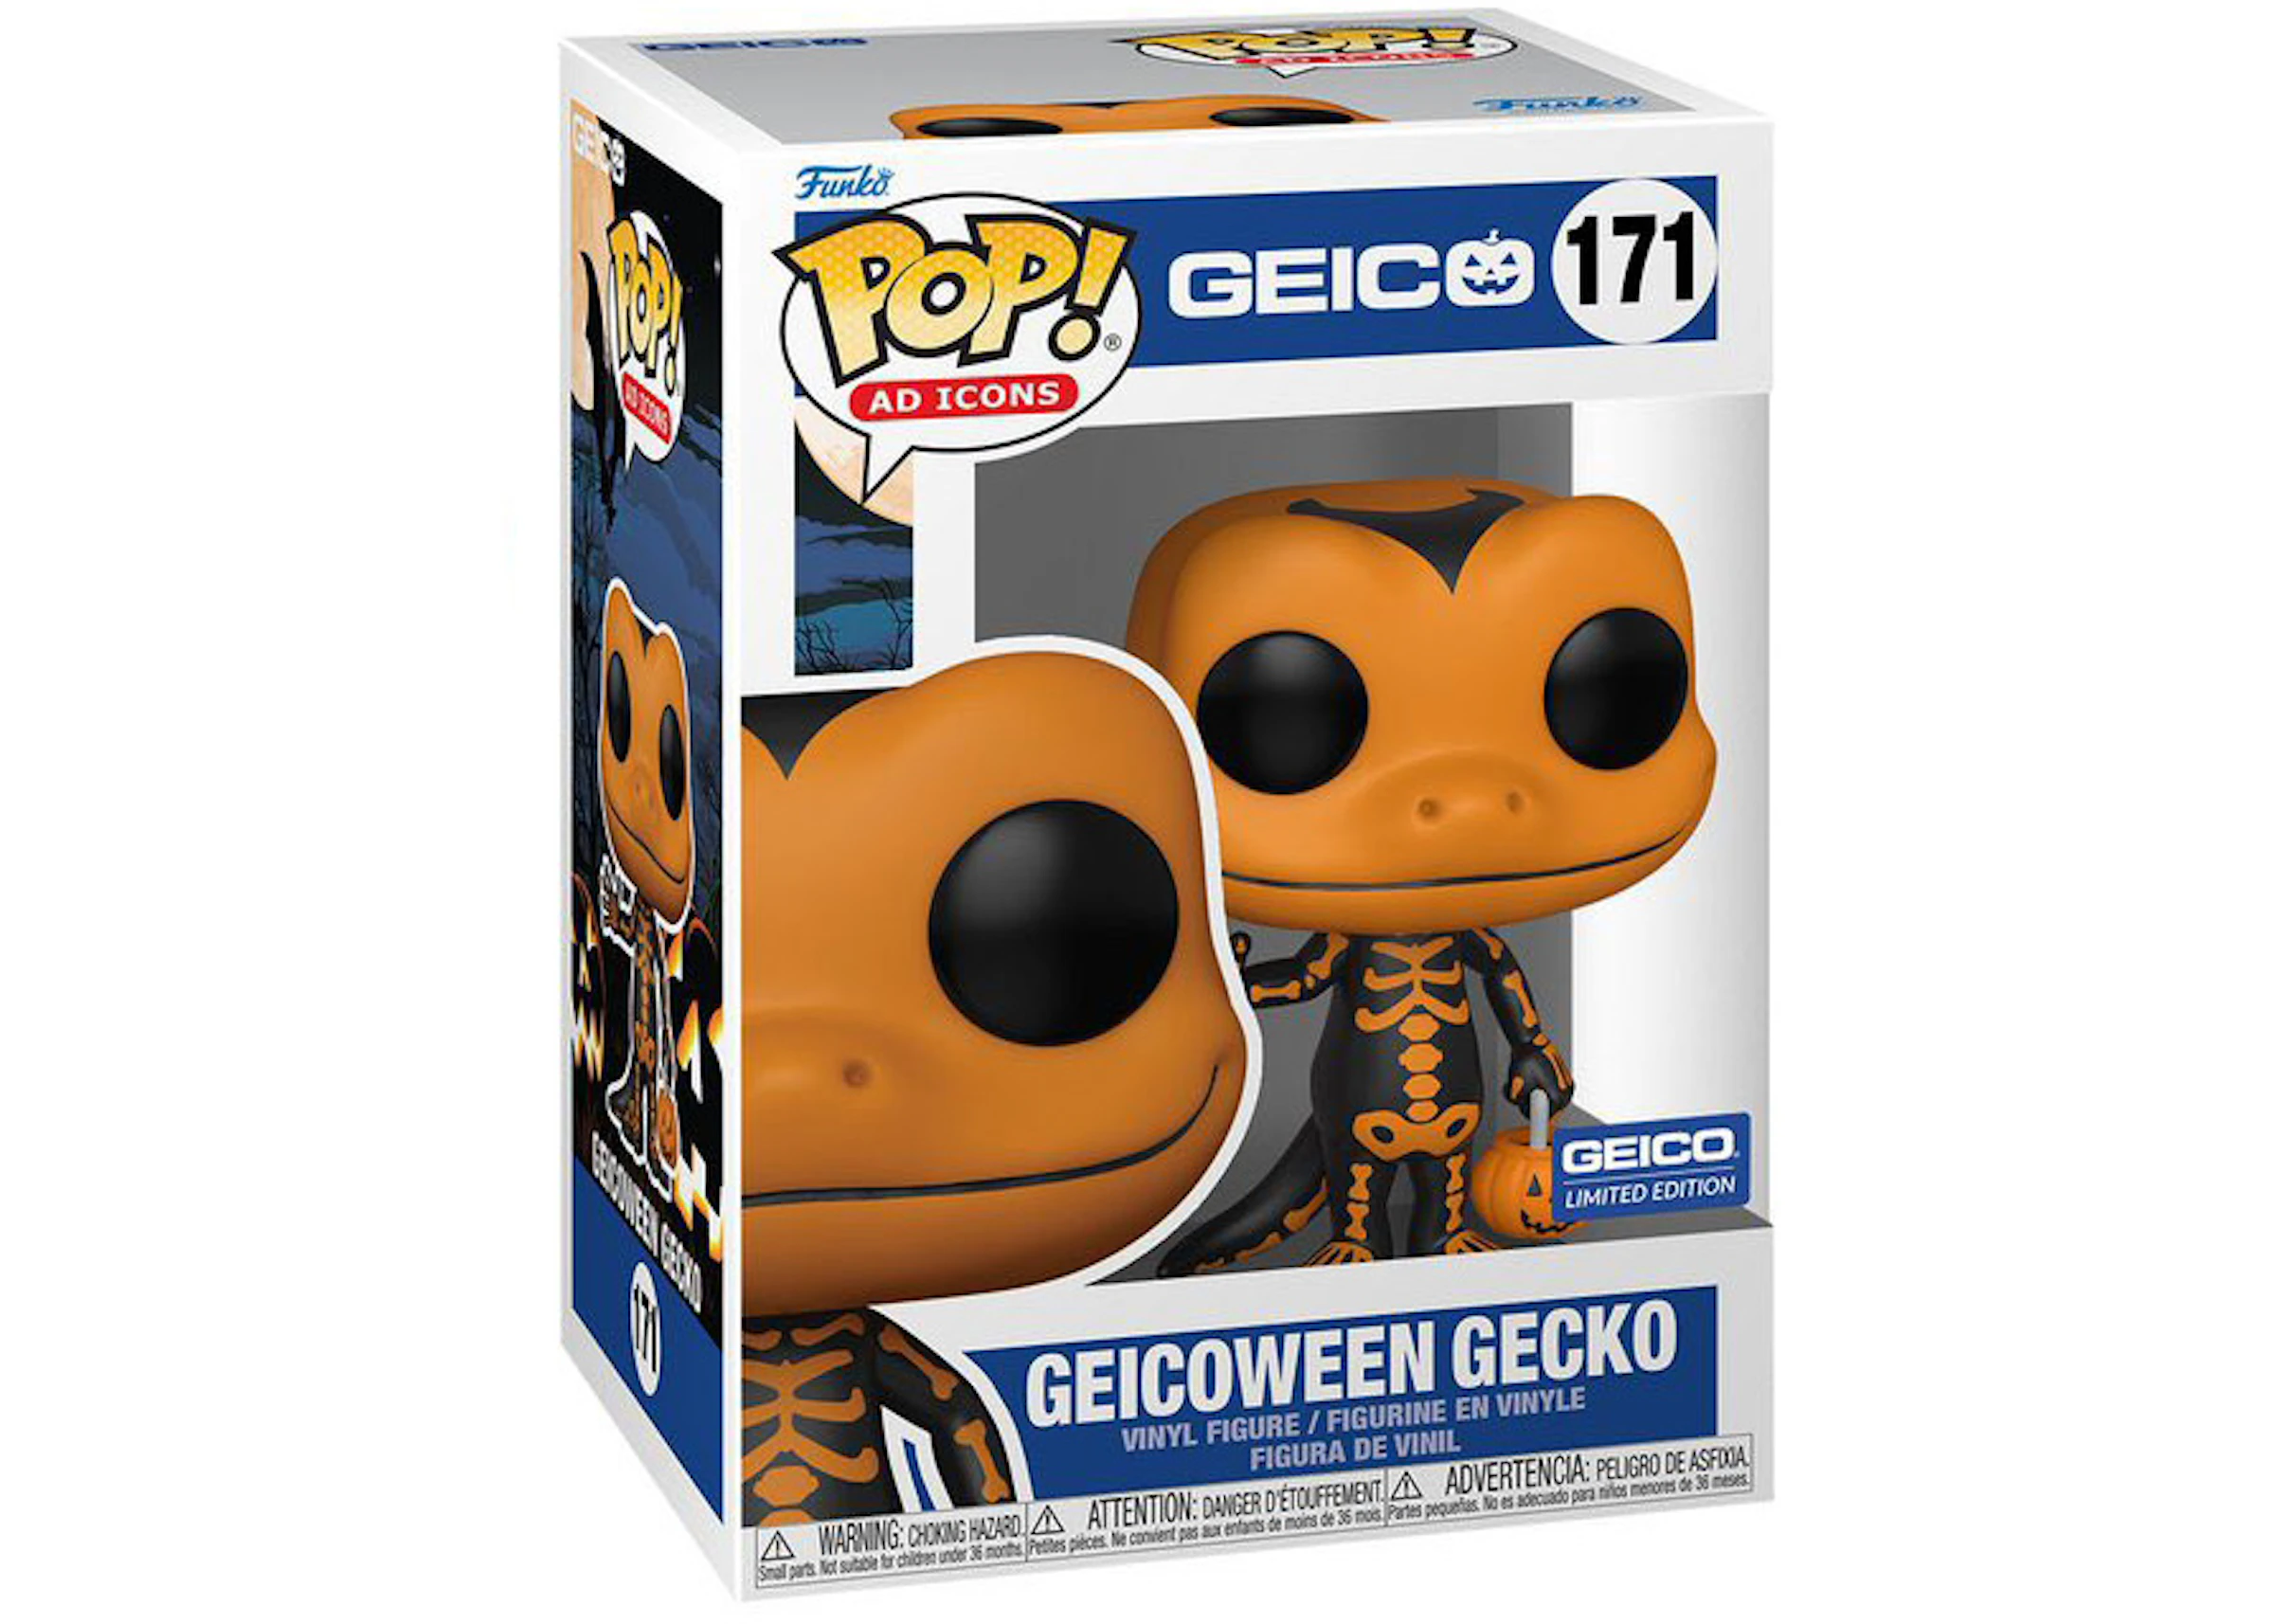 Funko Pop! Ad Icons Geico Geicoween Gecko Geico Exclusive Figure #171 - US